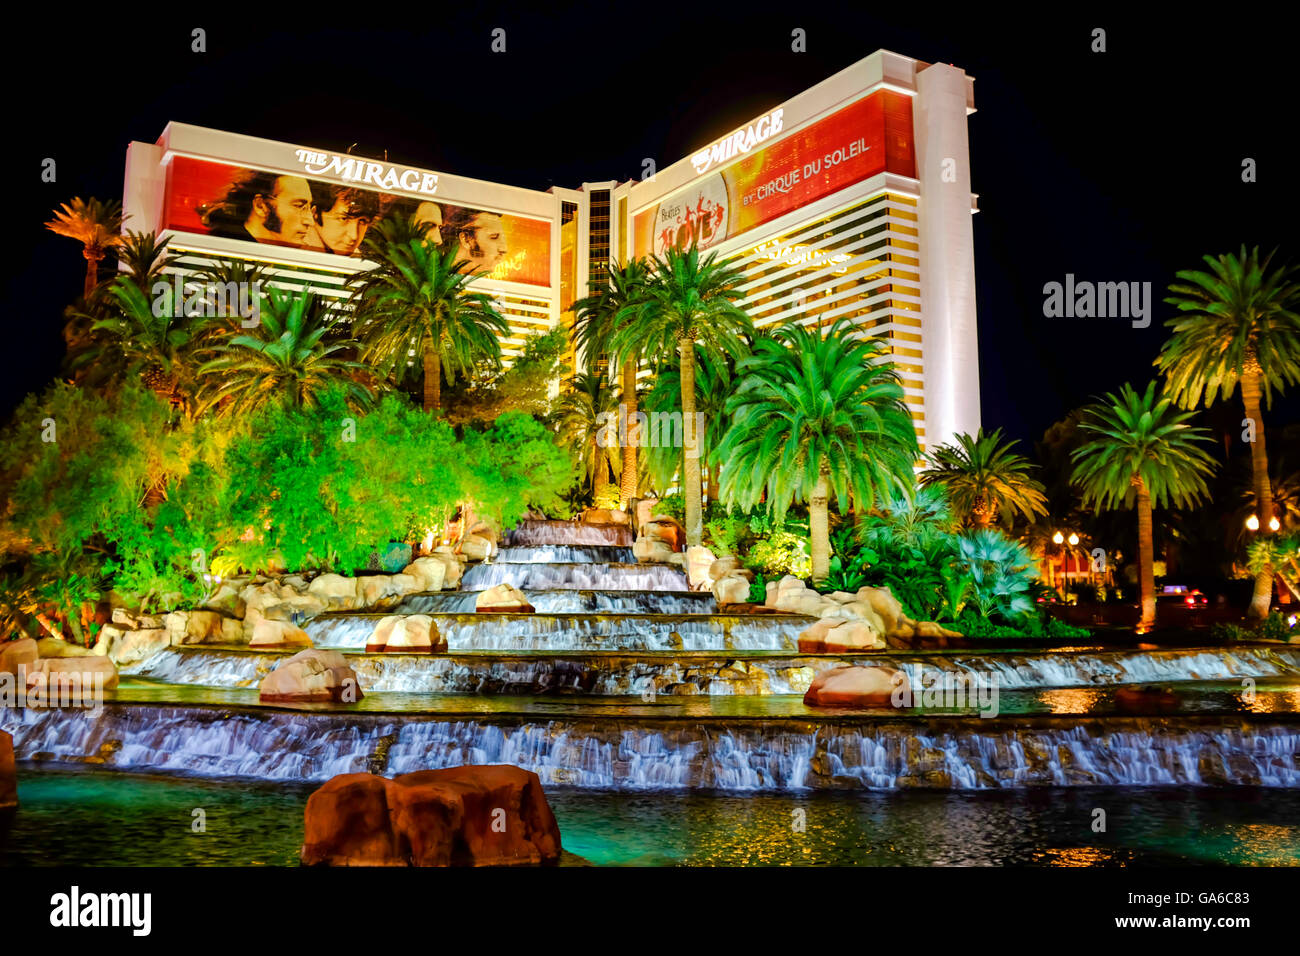 La Mirage Hotel and Casino, Las Vegas Foto de stock